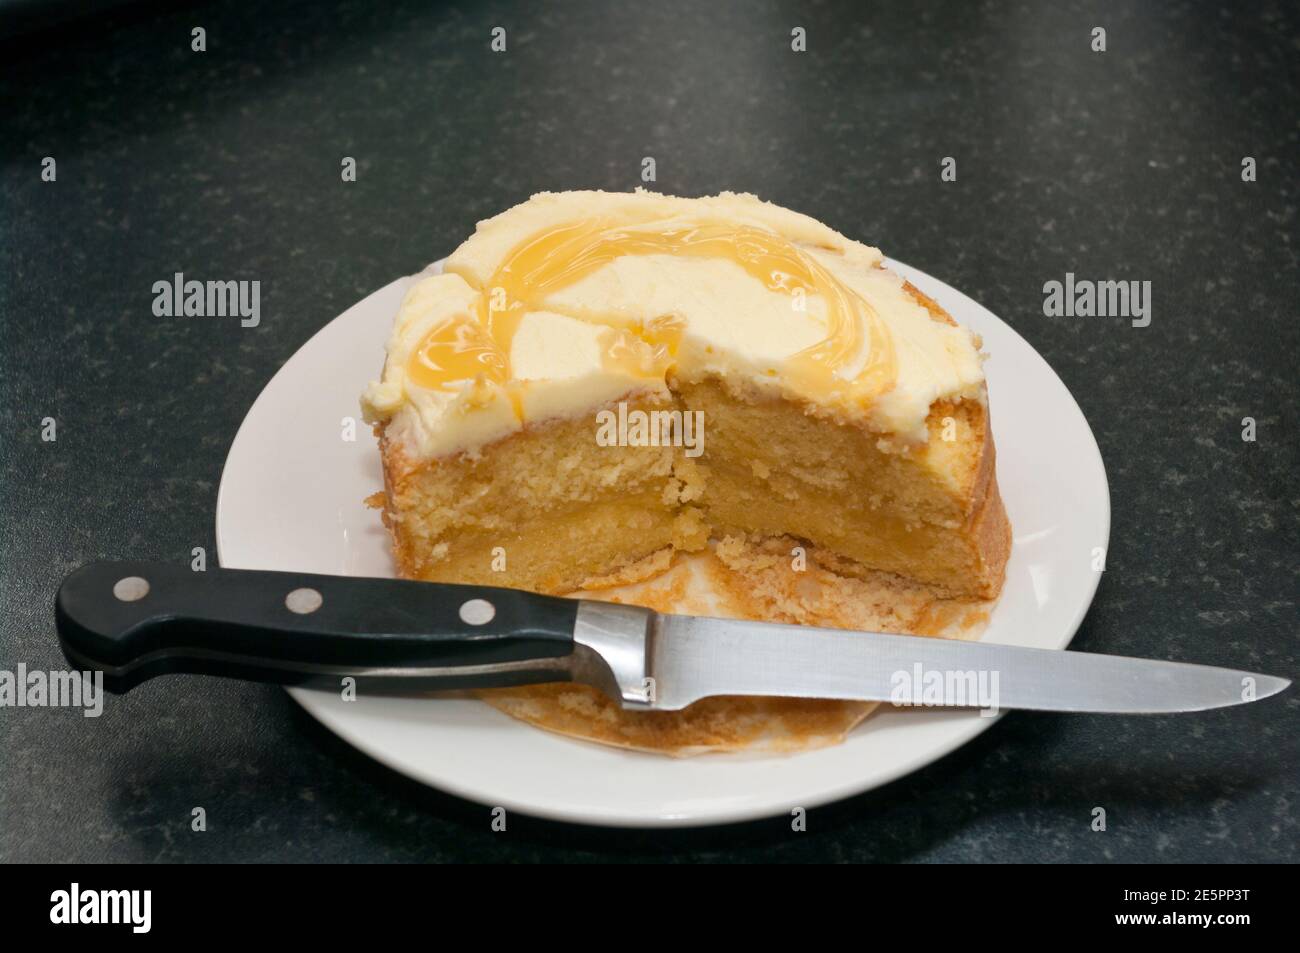 Sliced Cut Lemon Cake On A White Plate With A Knife Stock Photo